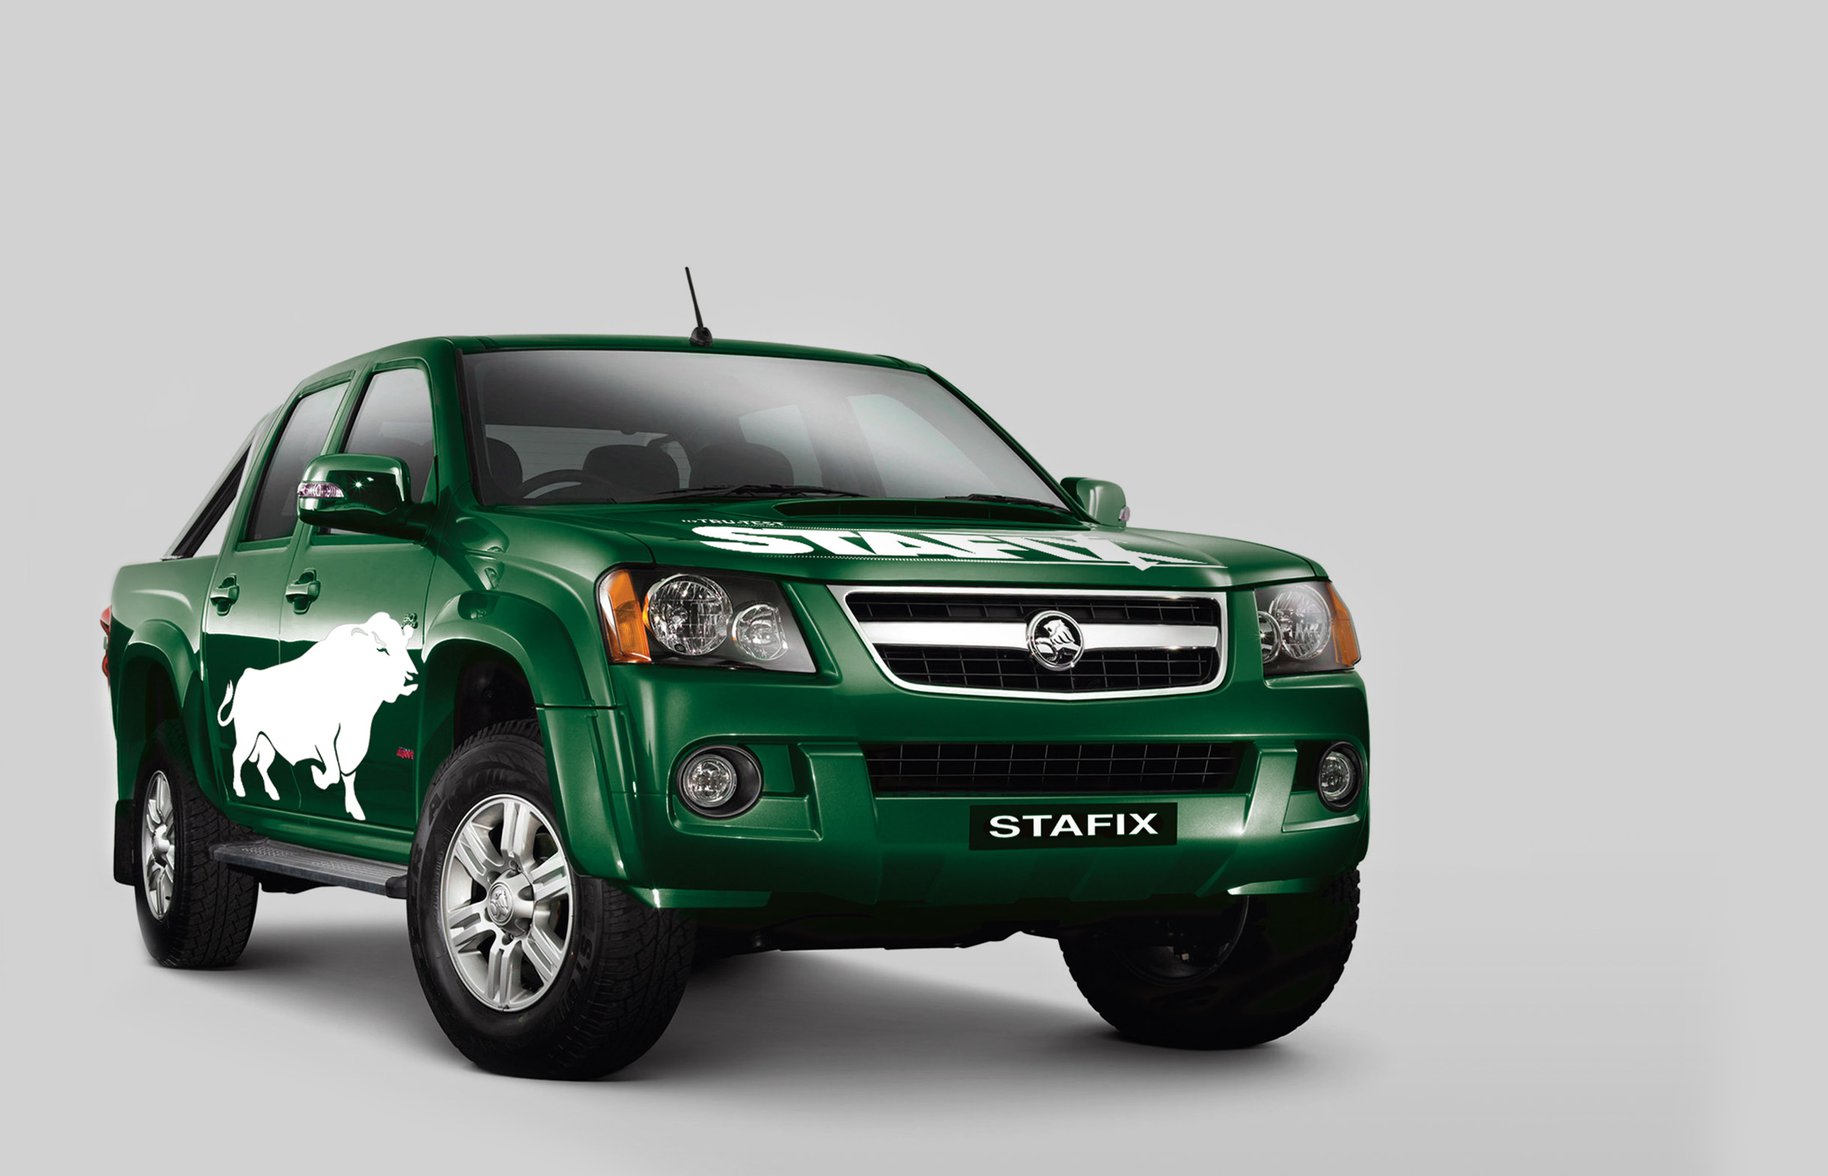 Stafix vehicle branding